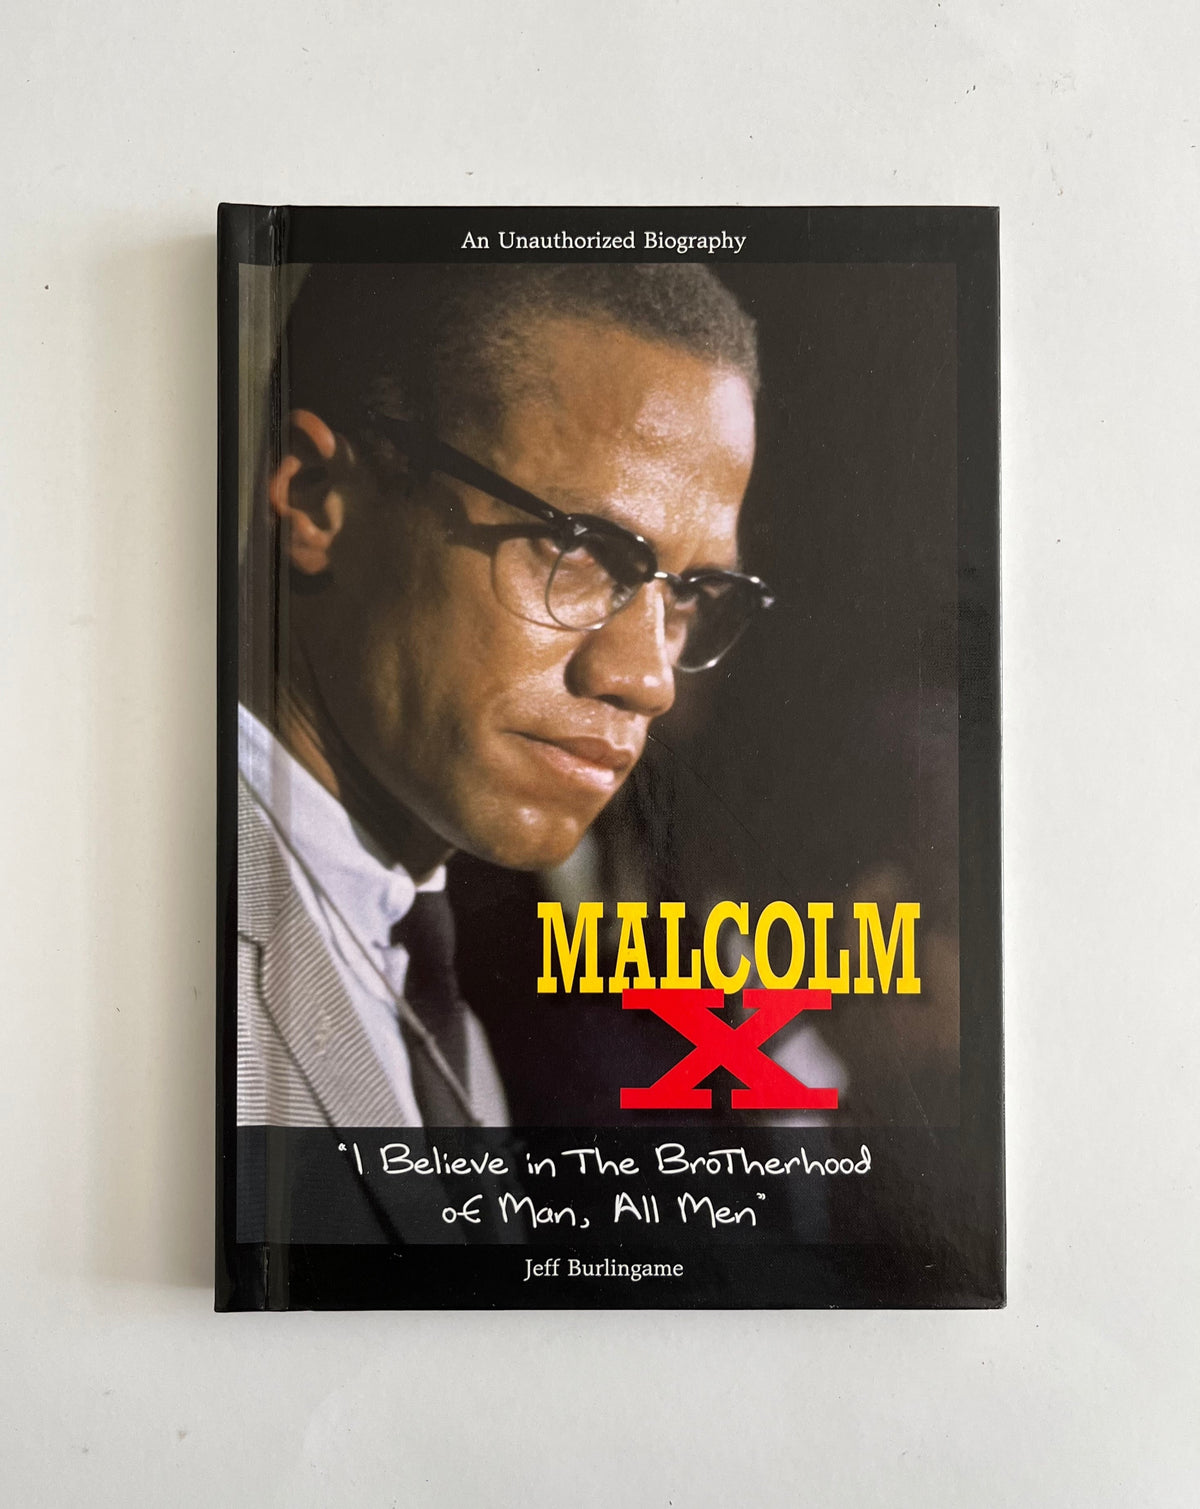 Malcolm X by Jeff Burlingame